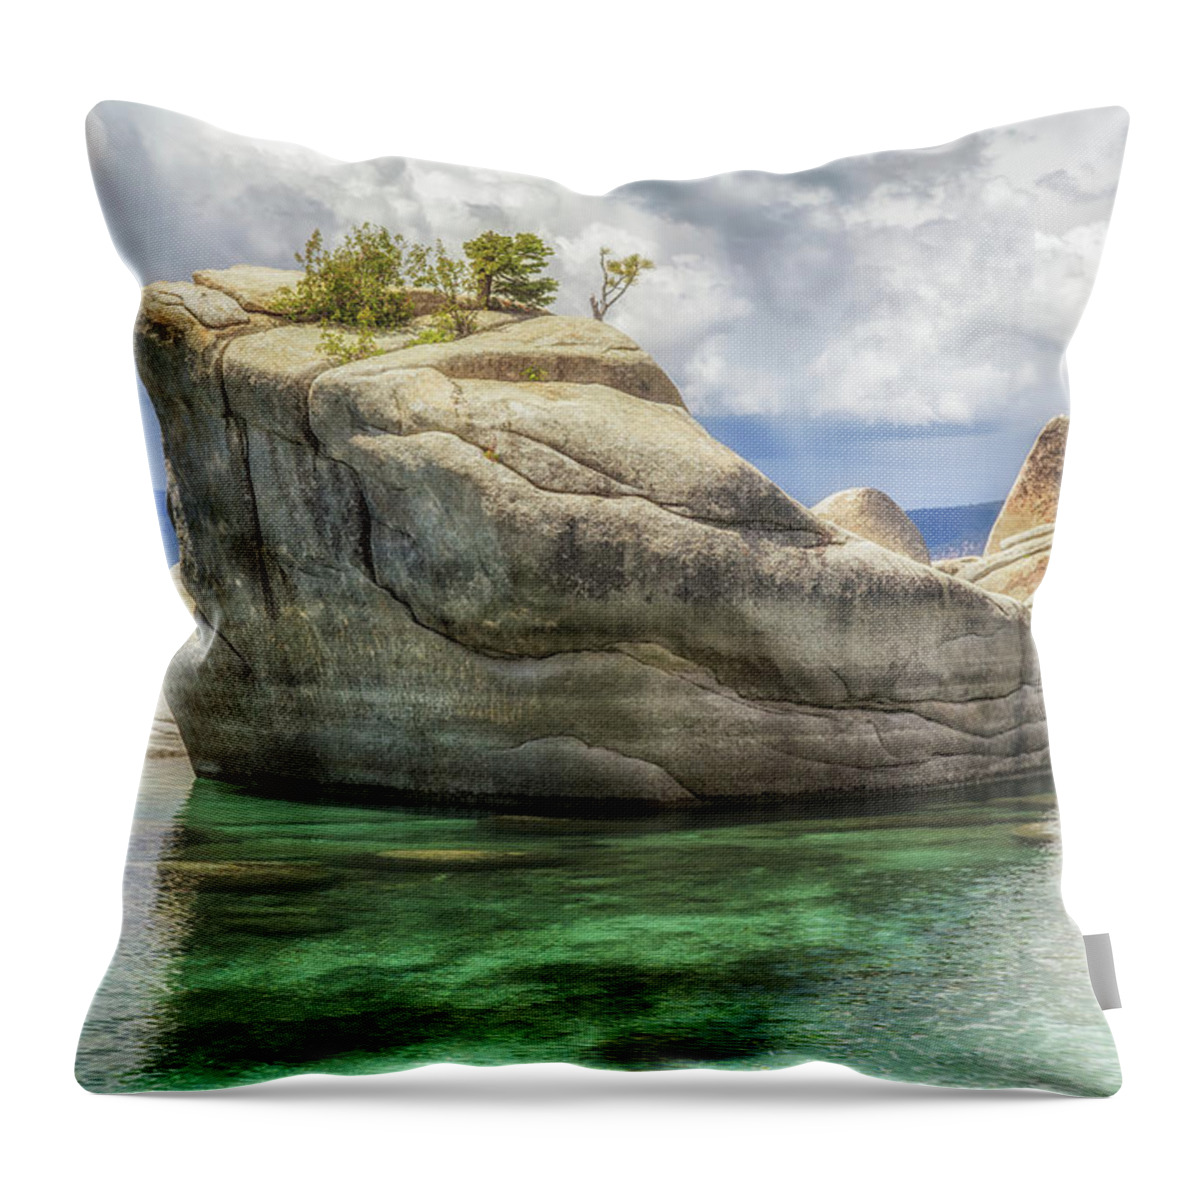 Landscape Throw Pillow featuring the photograph Bonsai Rock and Rain Shower by Marc Crumpler